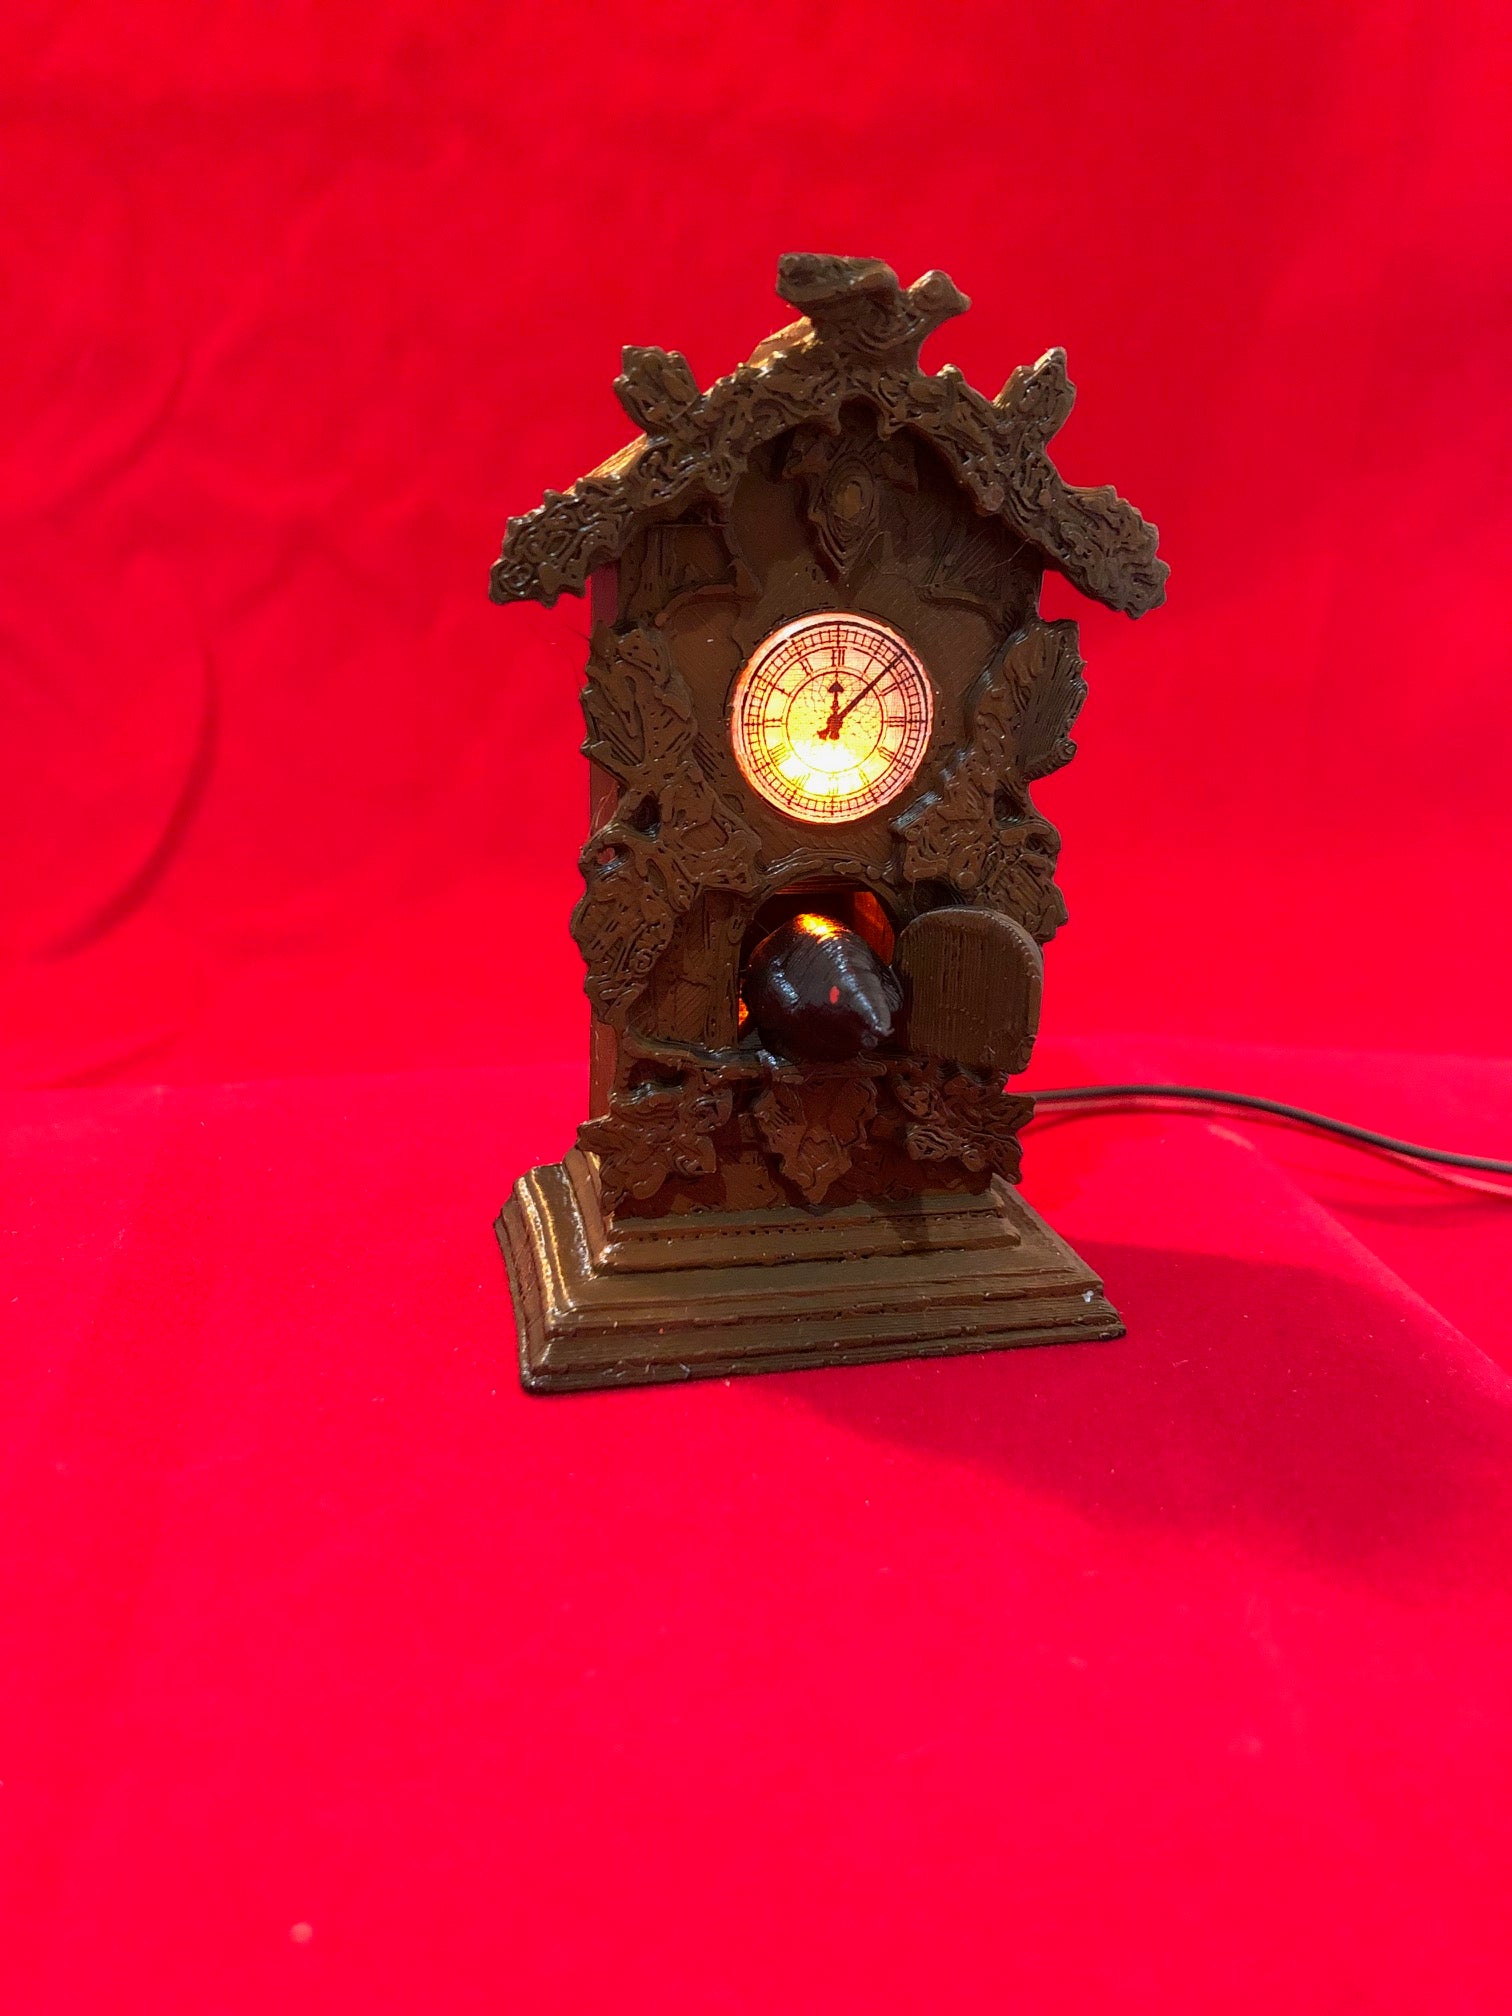 The Munsters "Raven Clock" custom illuminated Mod!